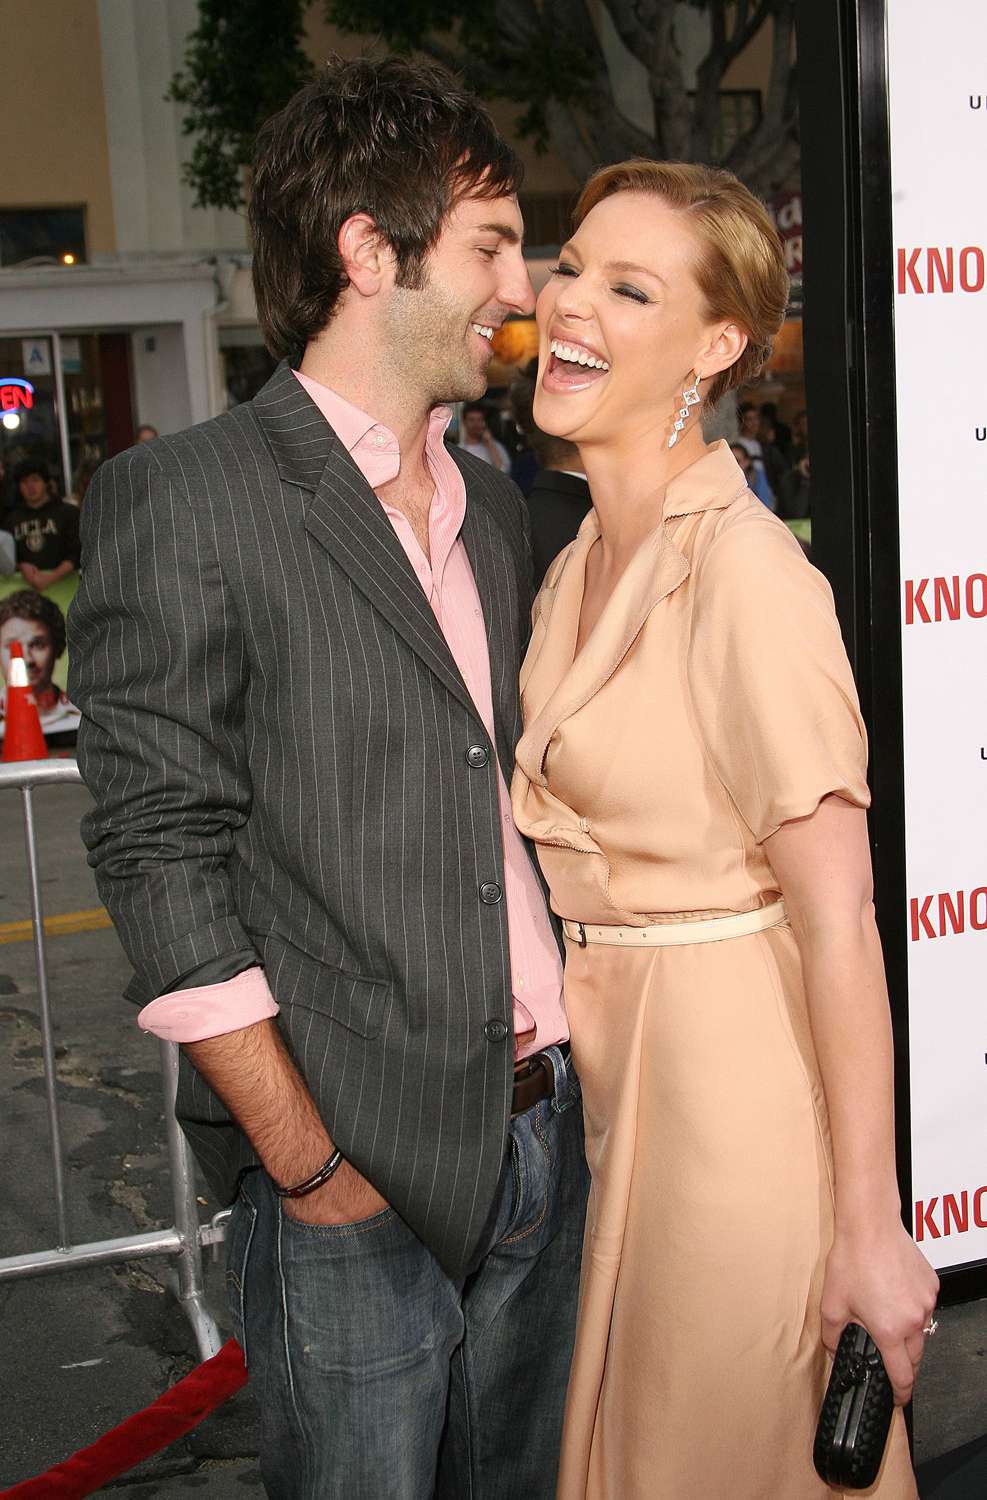 Katherine Heigl and Josh Kelley during "Knocked Up" Los Angeles Premiere